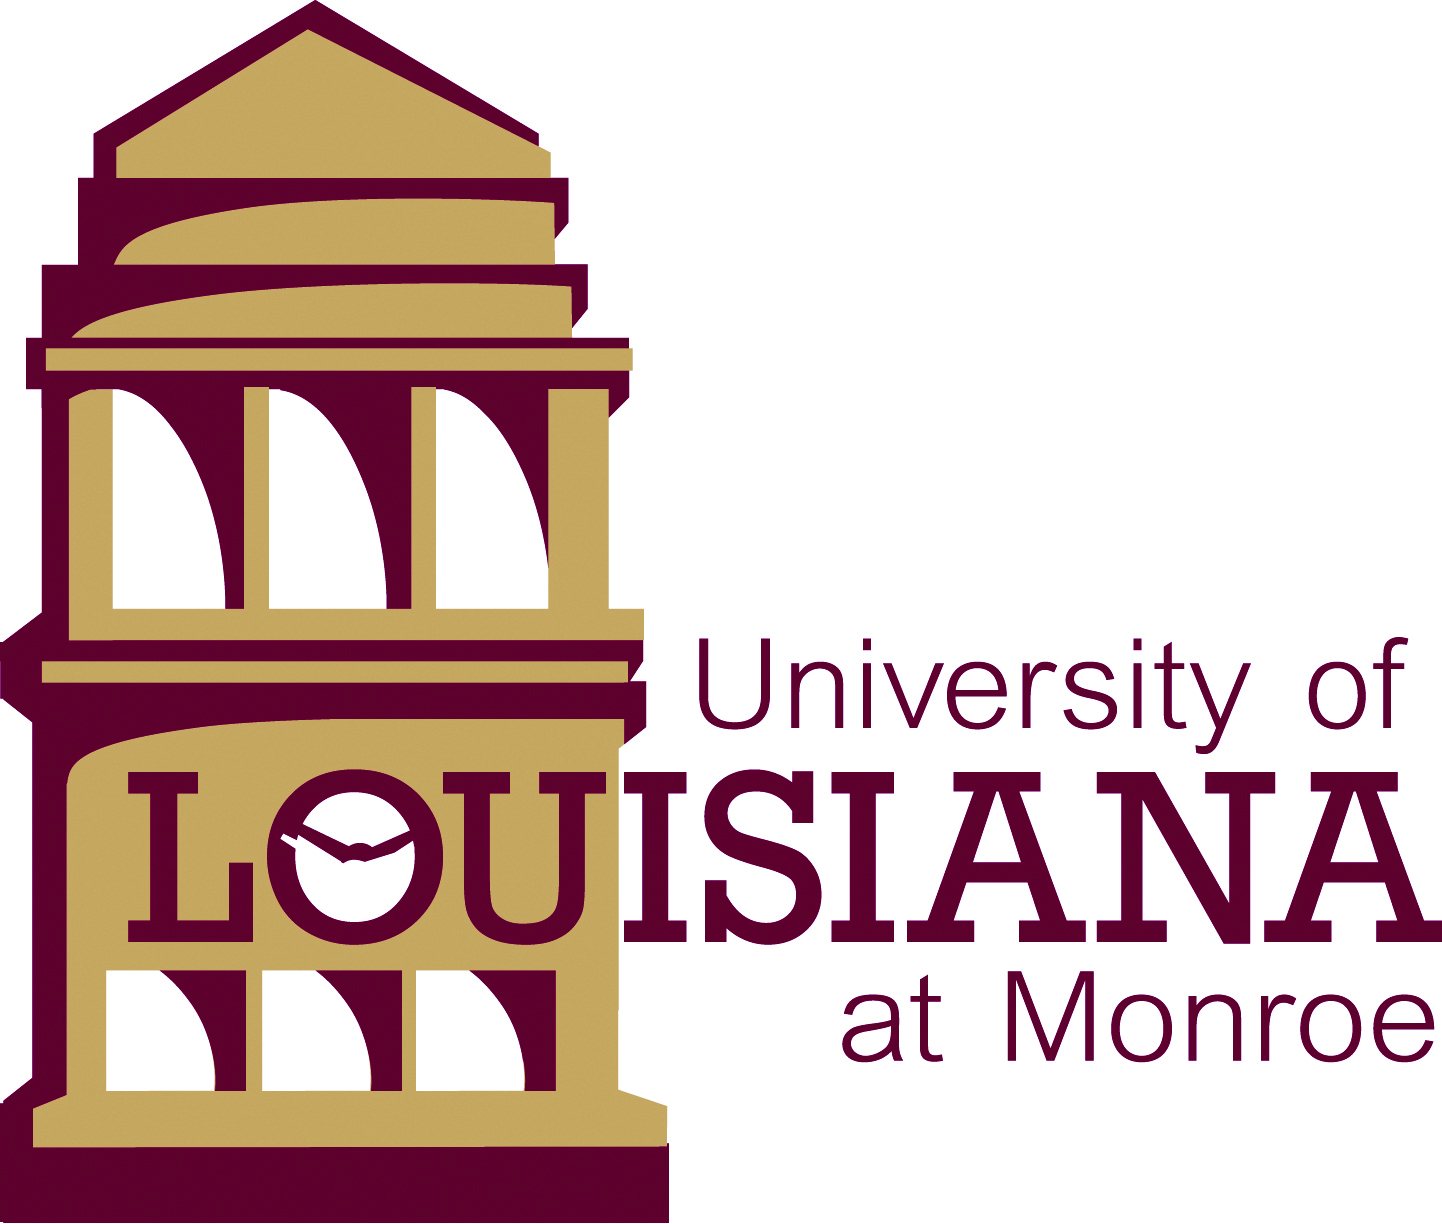 Cover Letter Writing  ULM University of Louisiana at Monroe